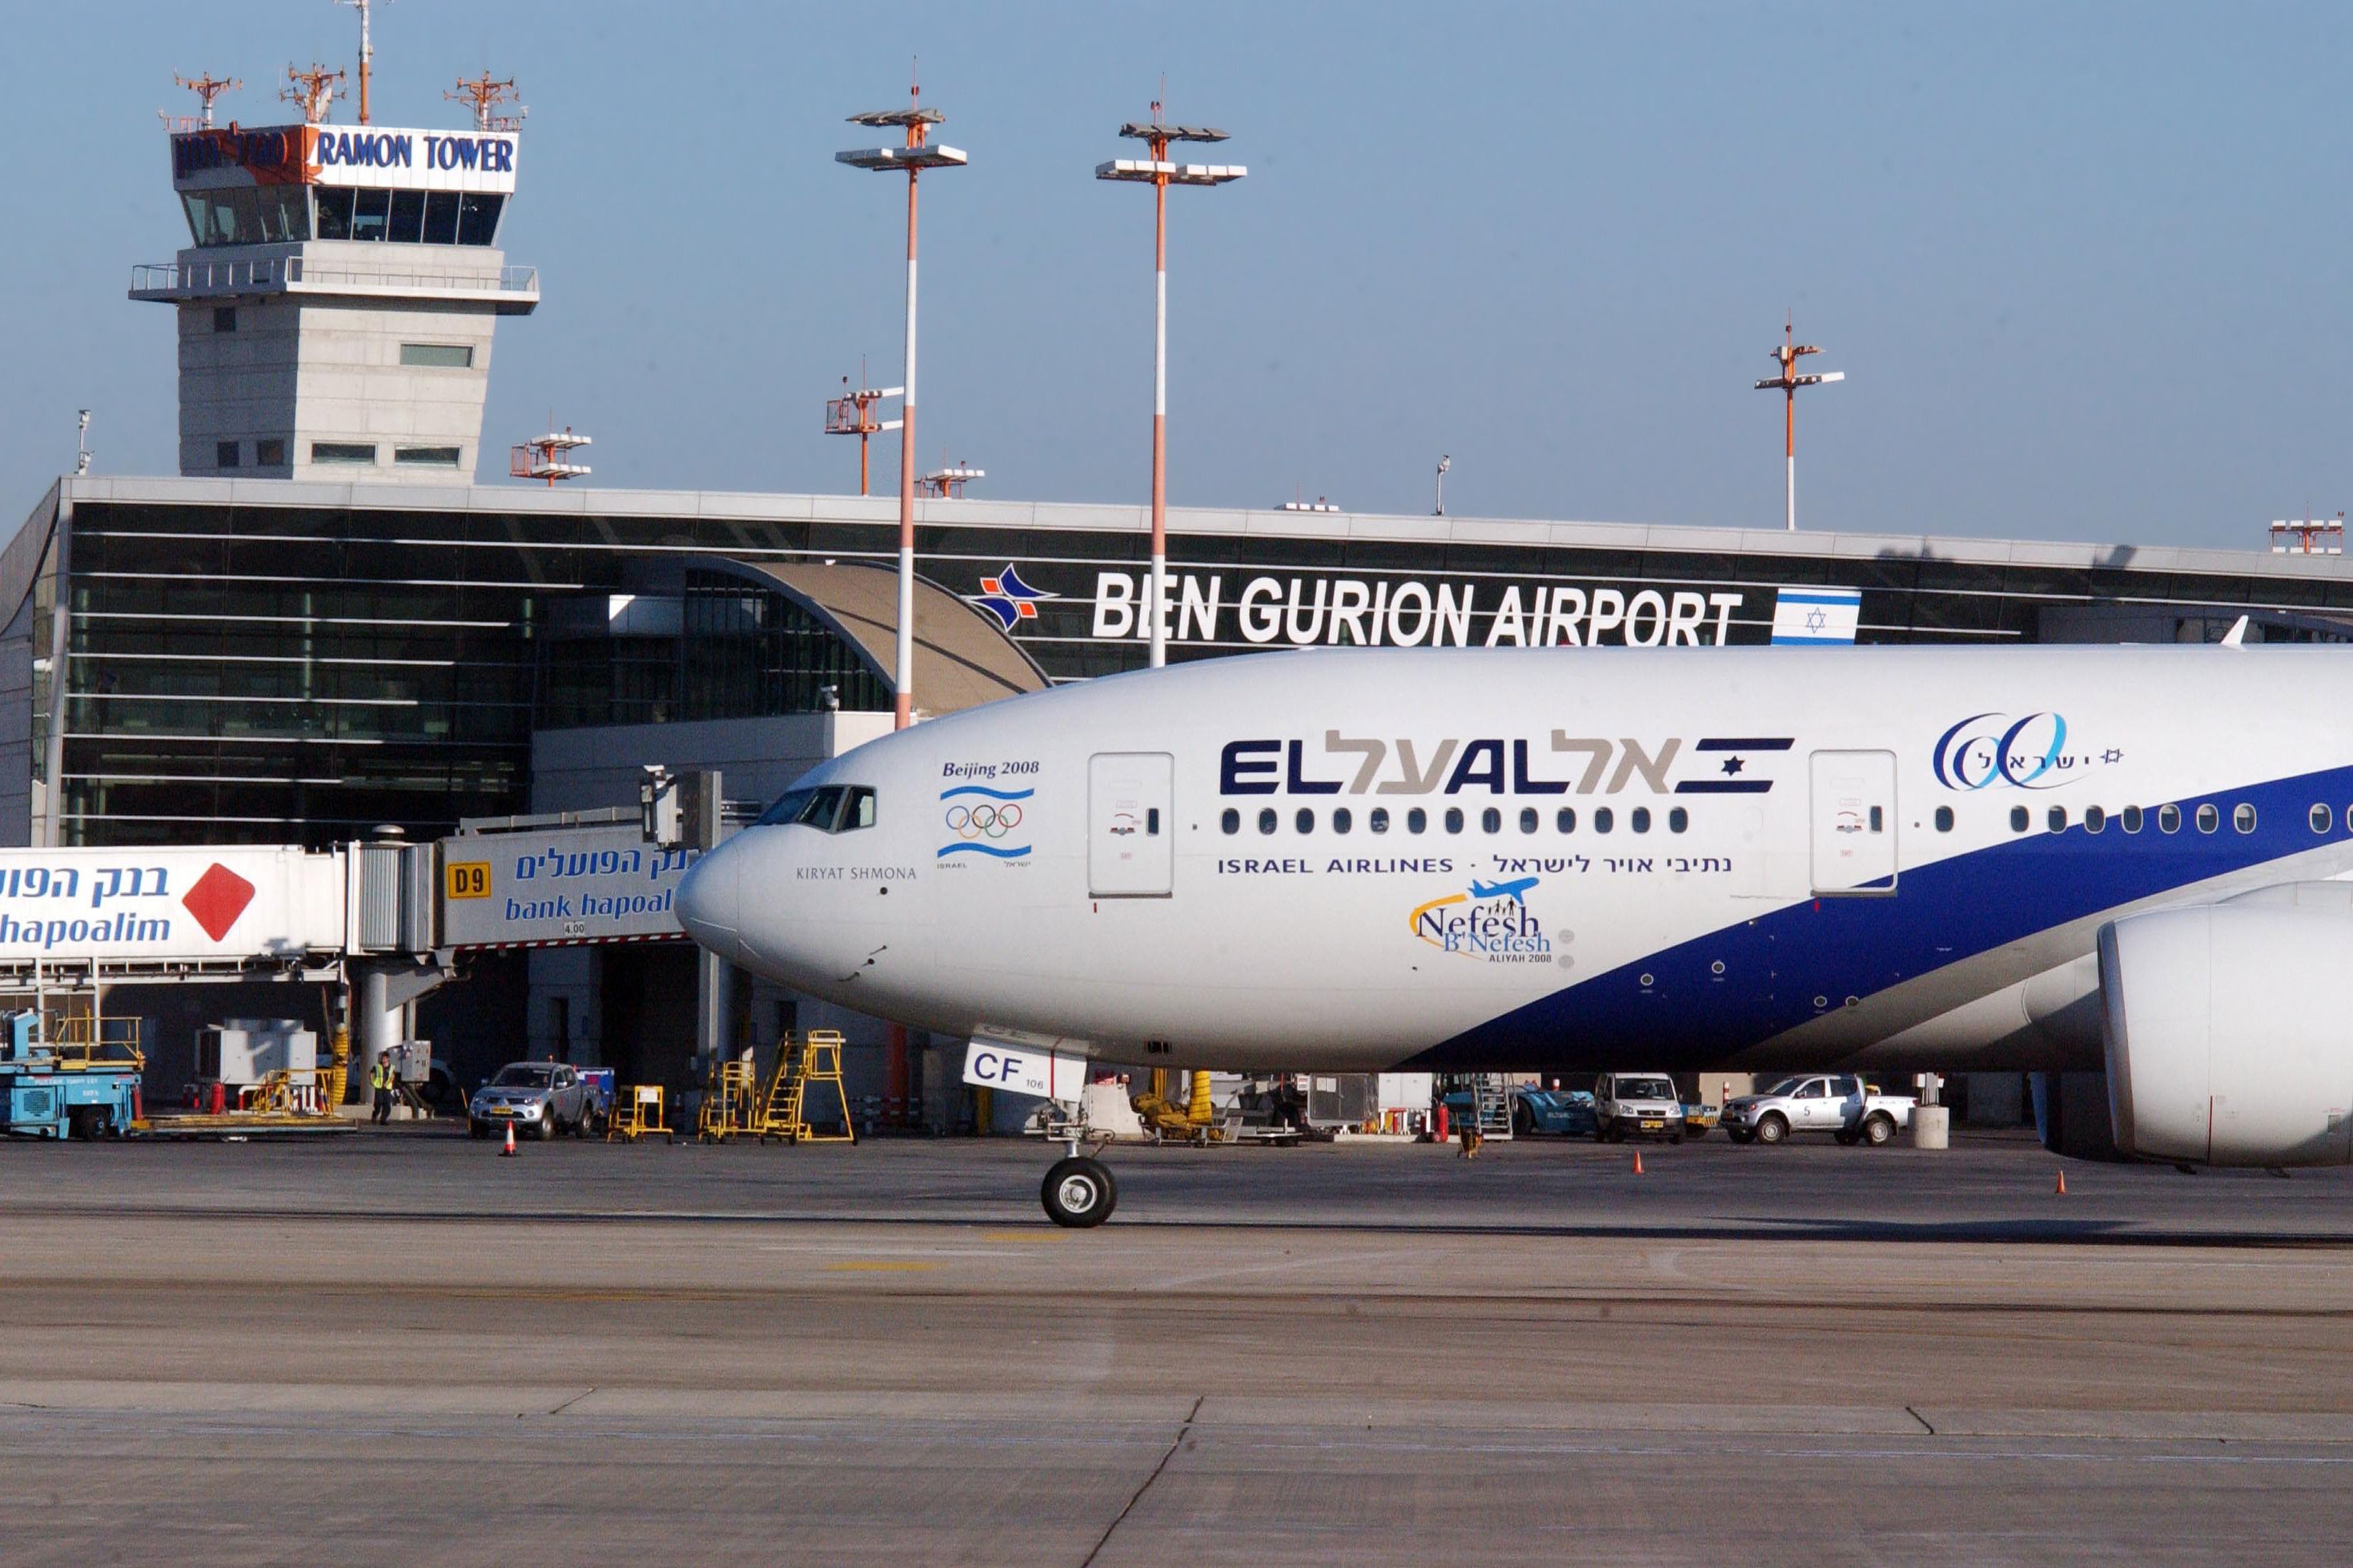 An El Al Plane at Tel Aviv Ben Gurion Airport.